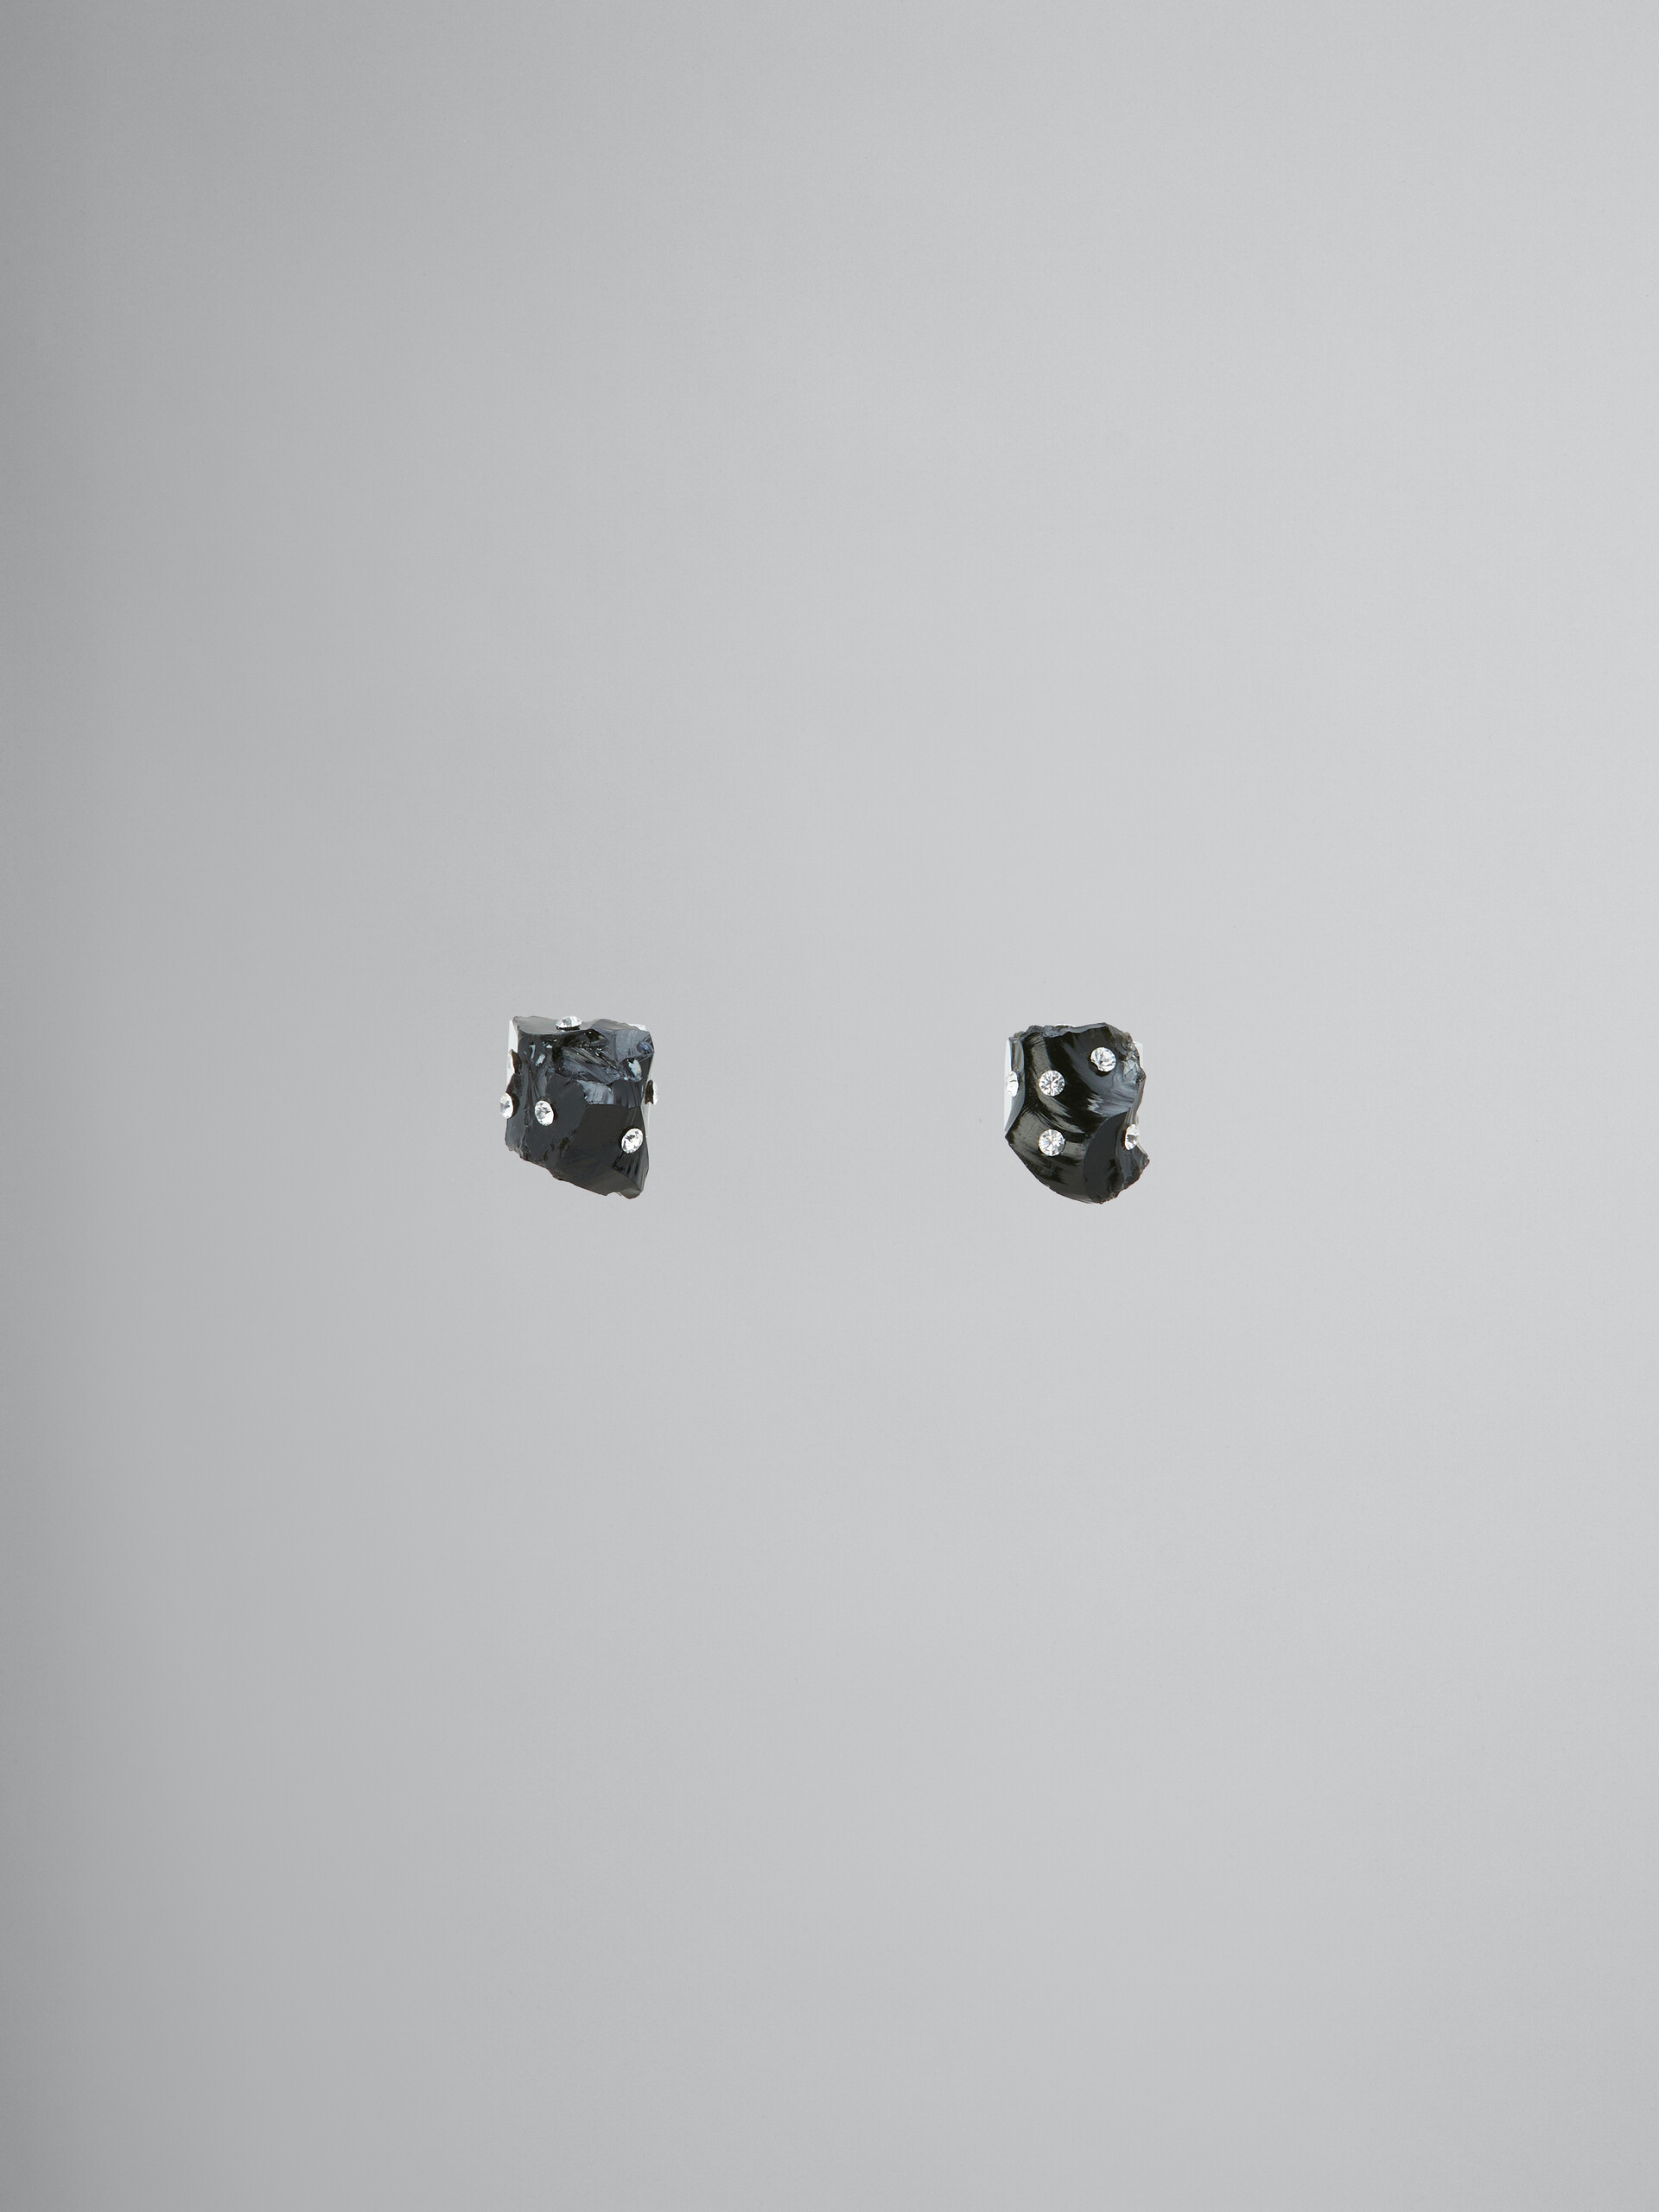 Black obsidian stud earrings with rhinestone polka dots - Earrings - Image 1